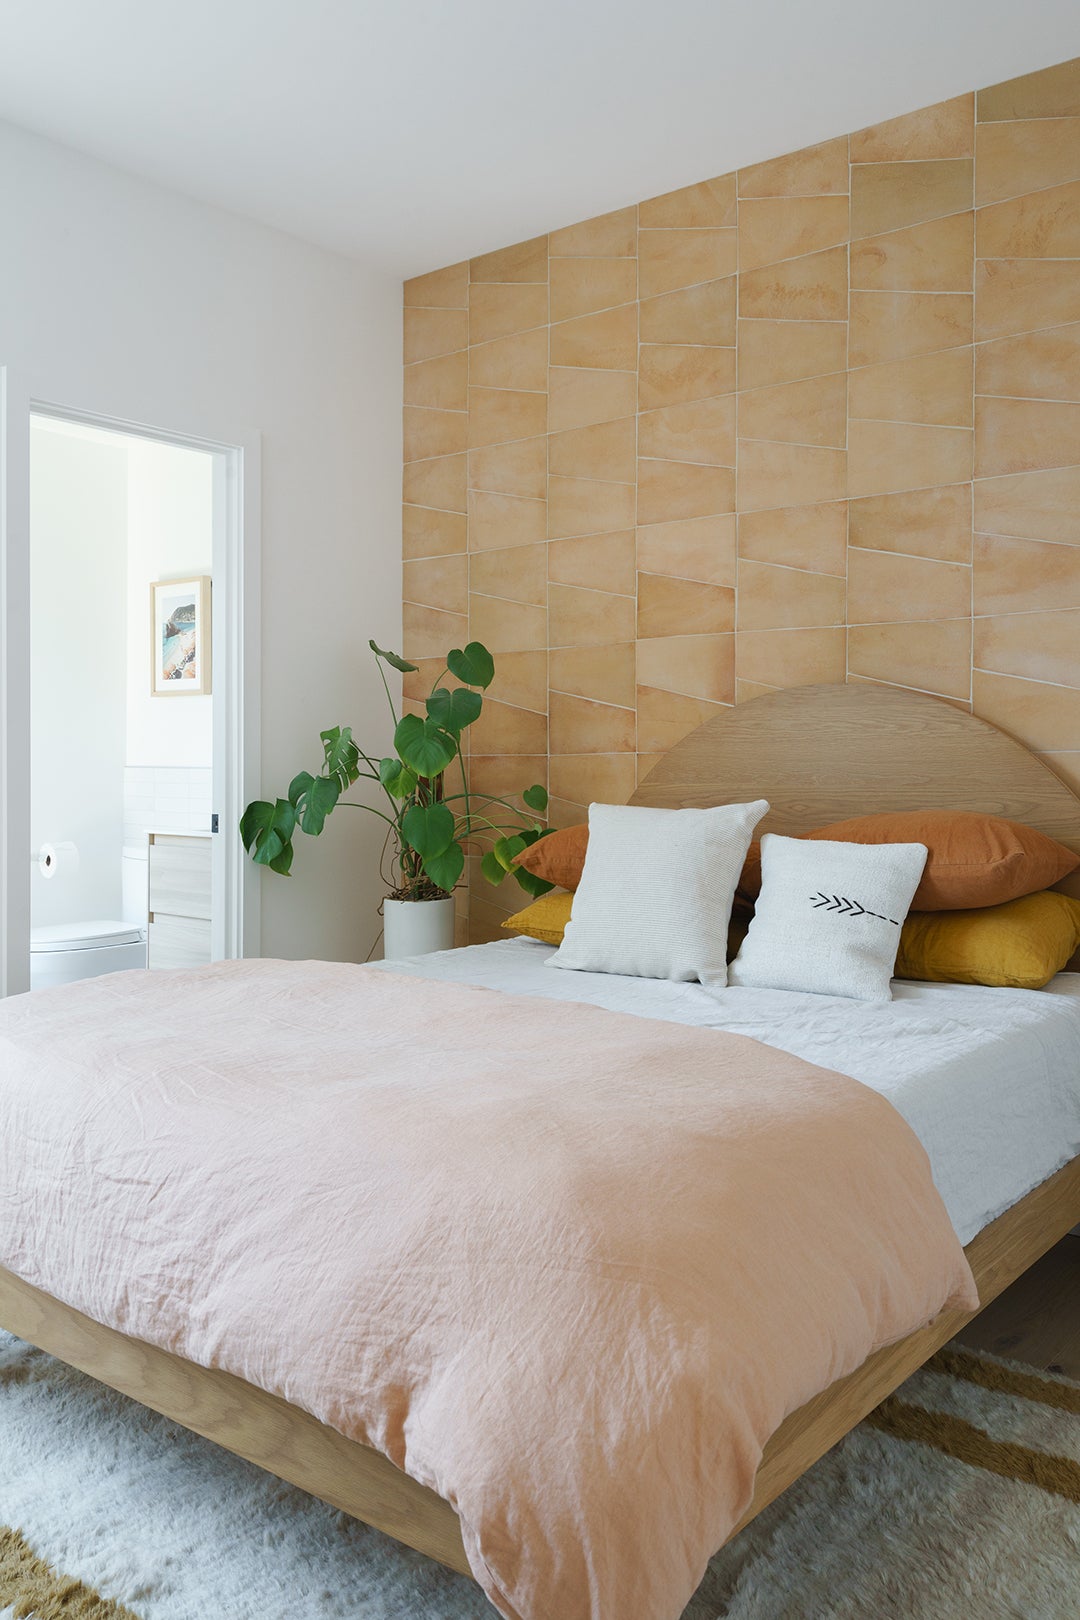 terracotta bedroom wall